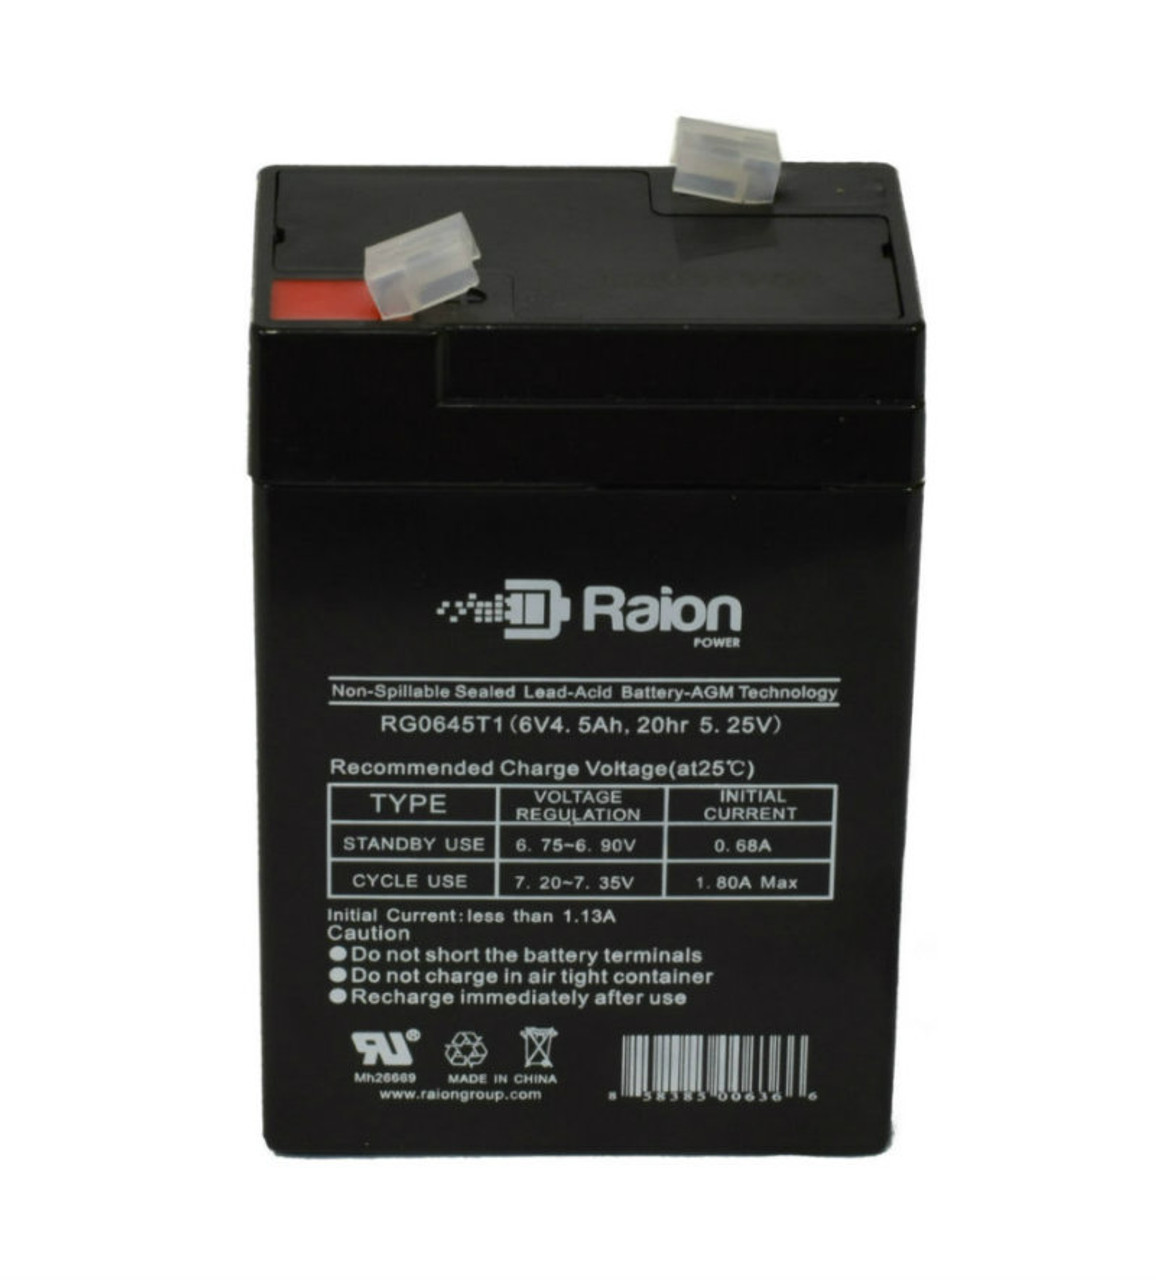 Raion Power RG0645T1 Replacement Battery Cartridge for Nellcor Puritan Bennett NPB 190